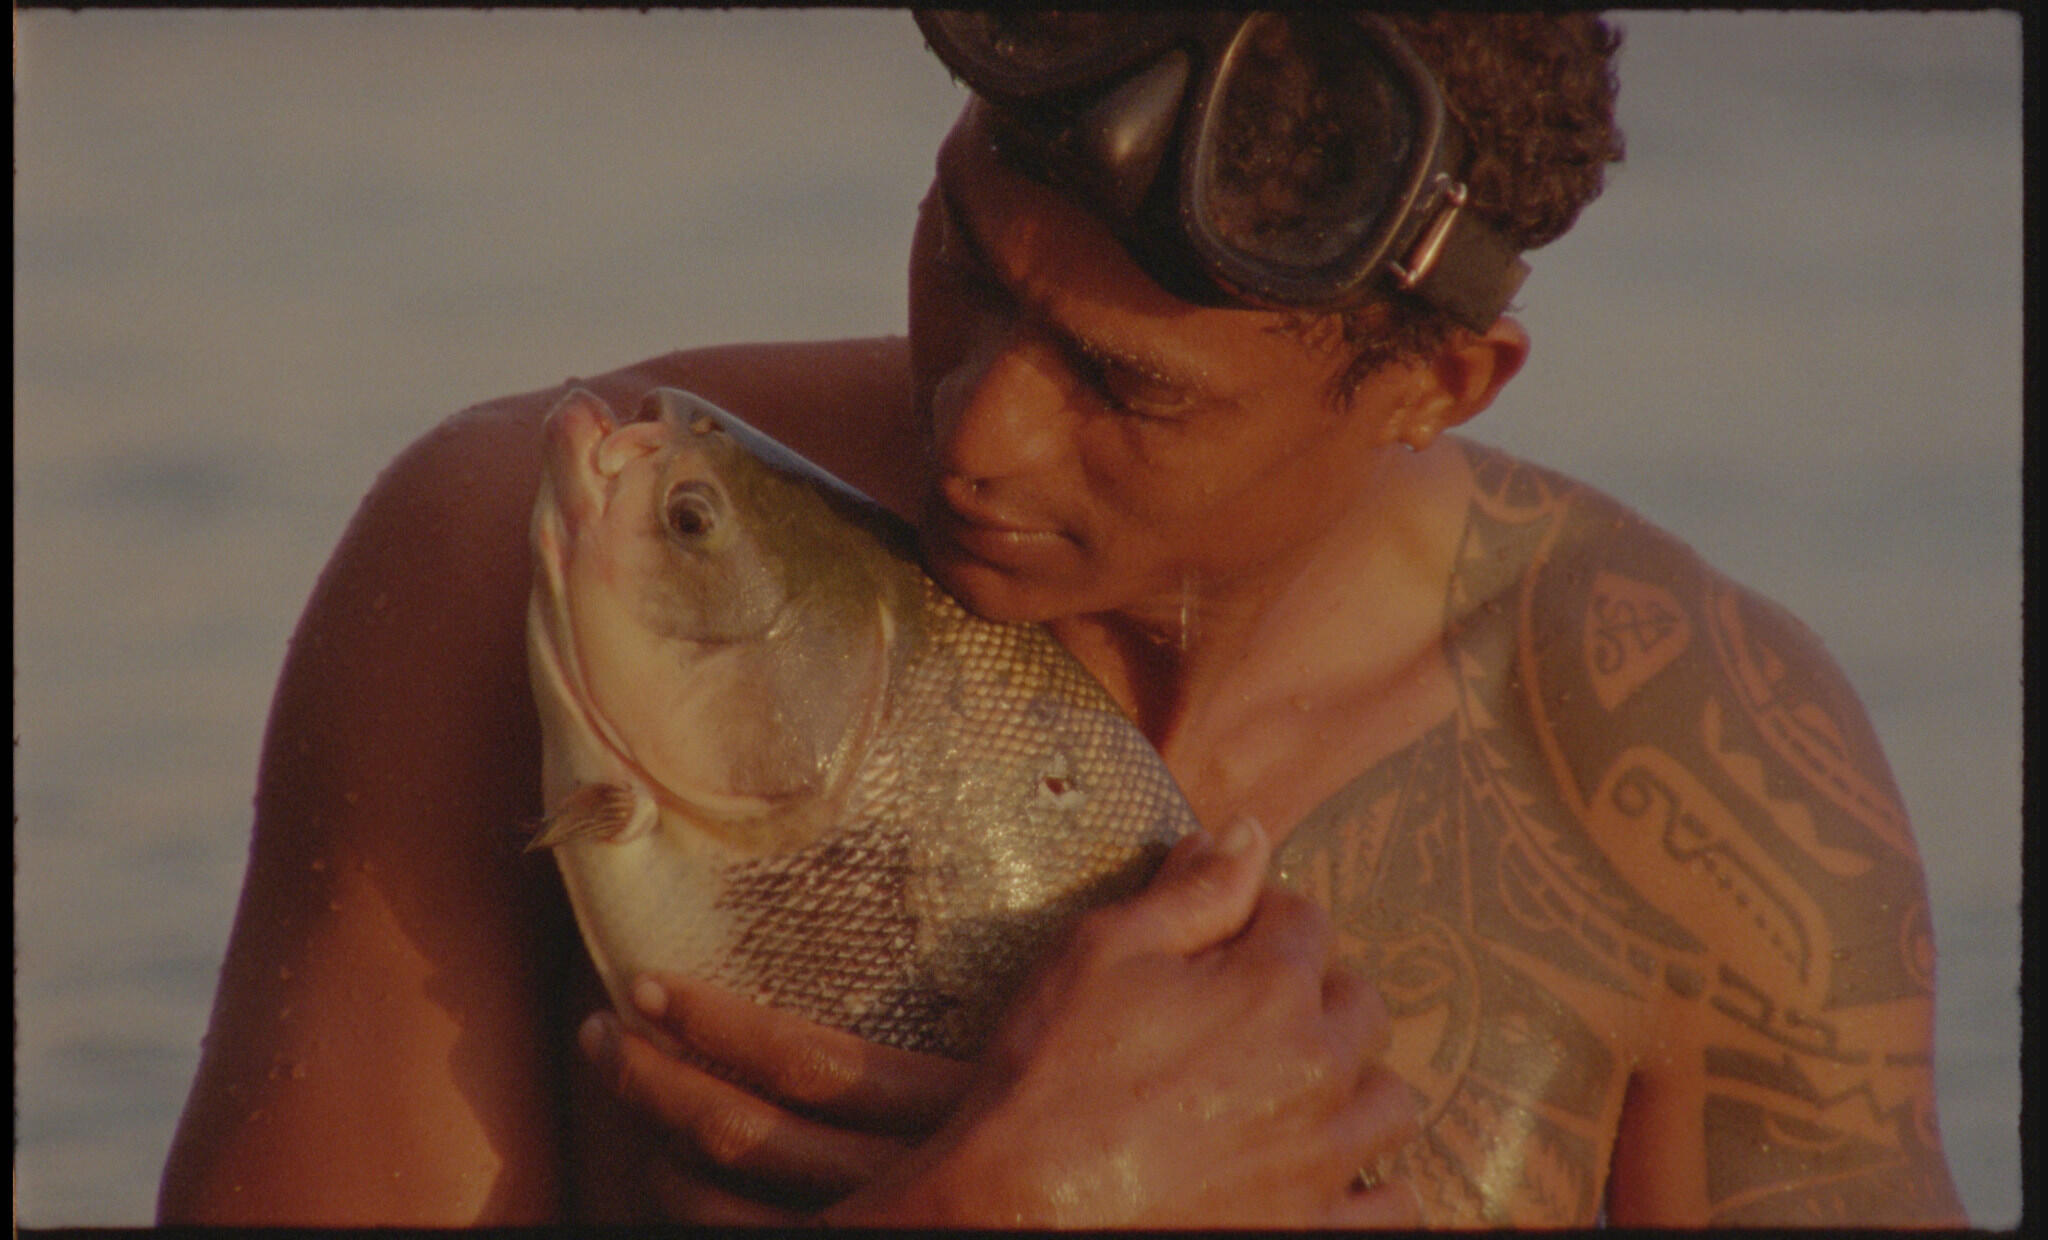 A video and photo series “O peixe” by Jonathas de Andrade.